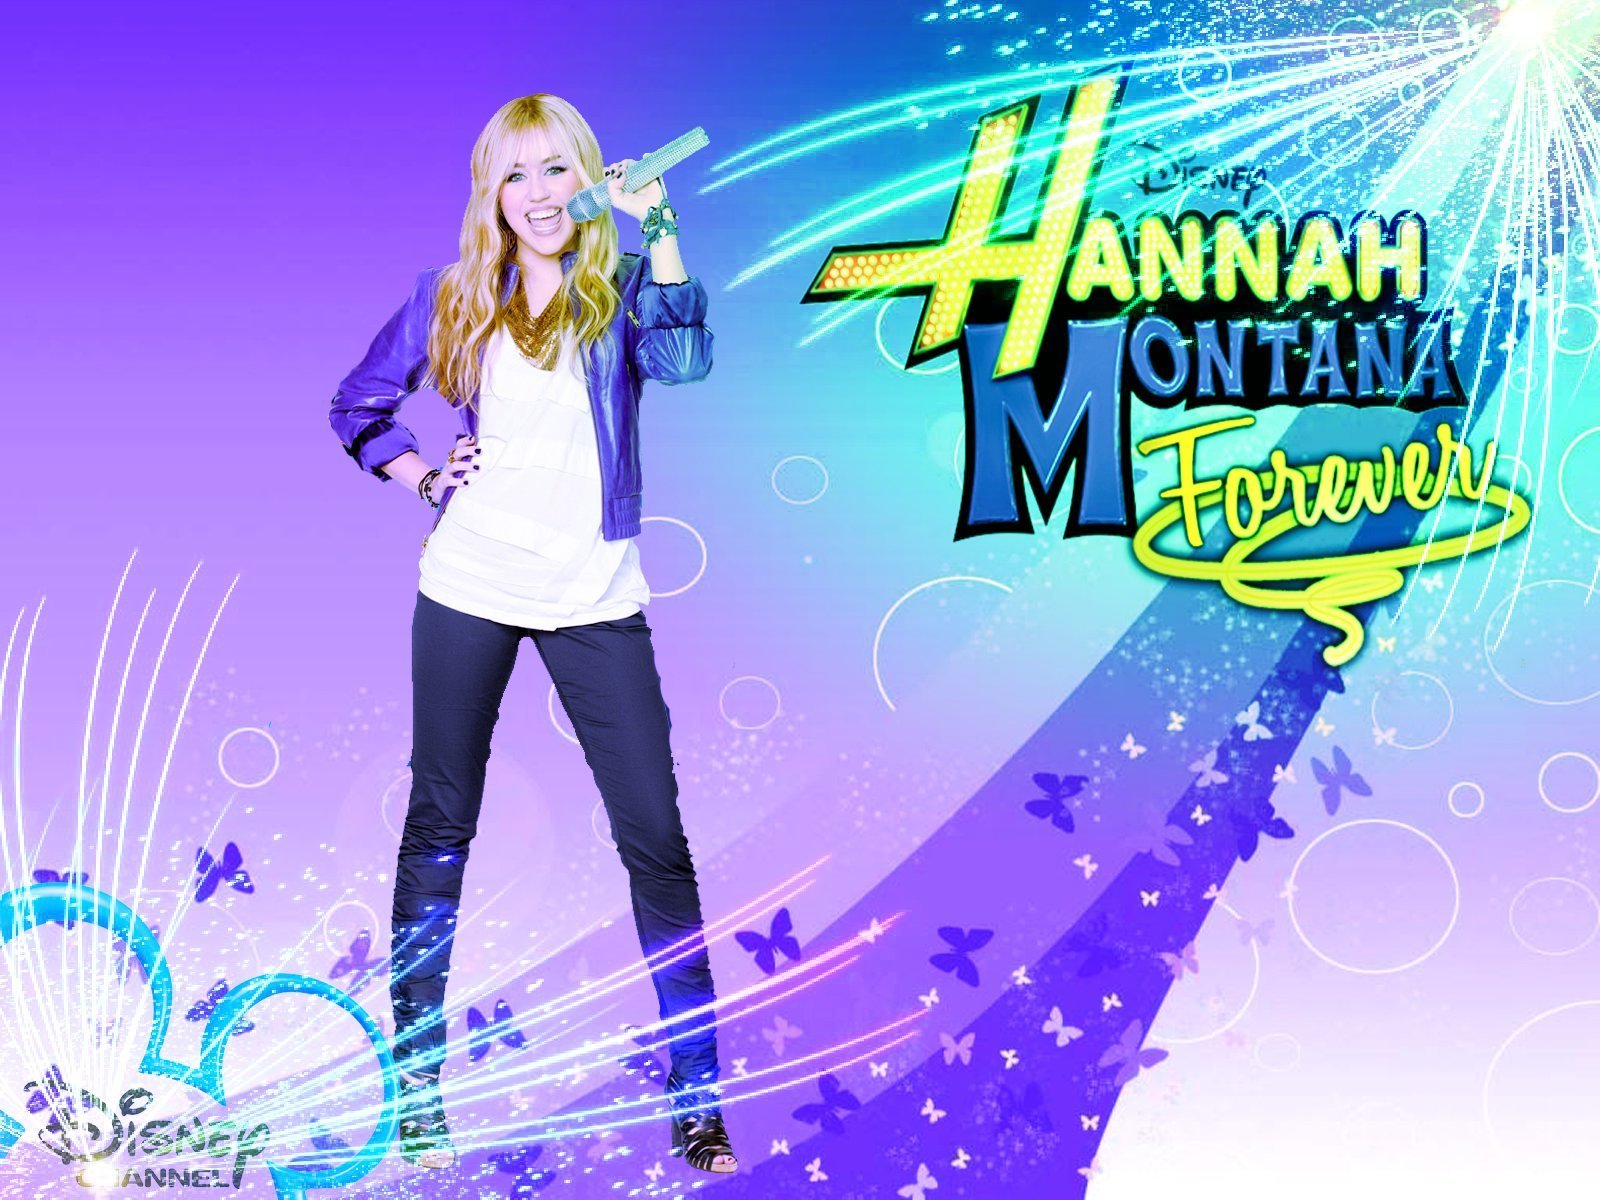 صور نادرة جدا لHannah Montana Miley Cyrus  طالعة مايلى بالصور قموووورررة كيوووت اوى Hannah-montana-forever-by-pearl-hannah-montana-13209355-1600-1200